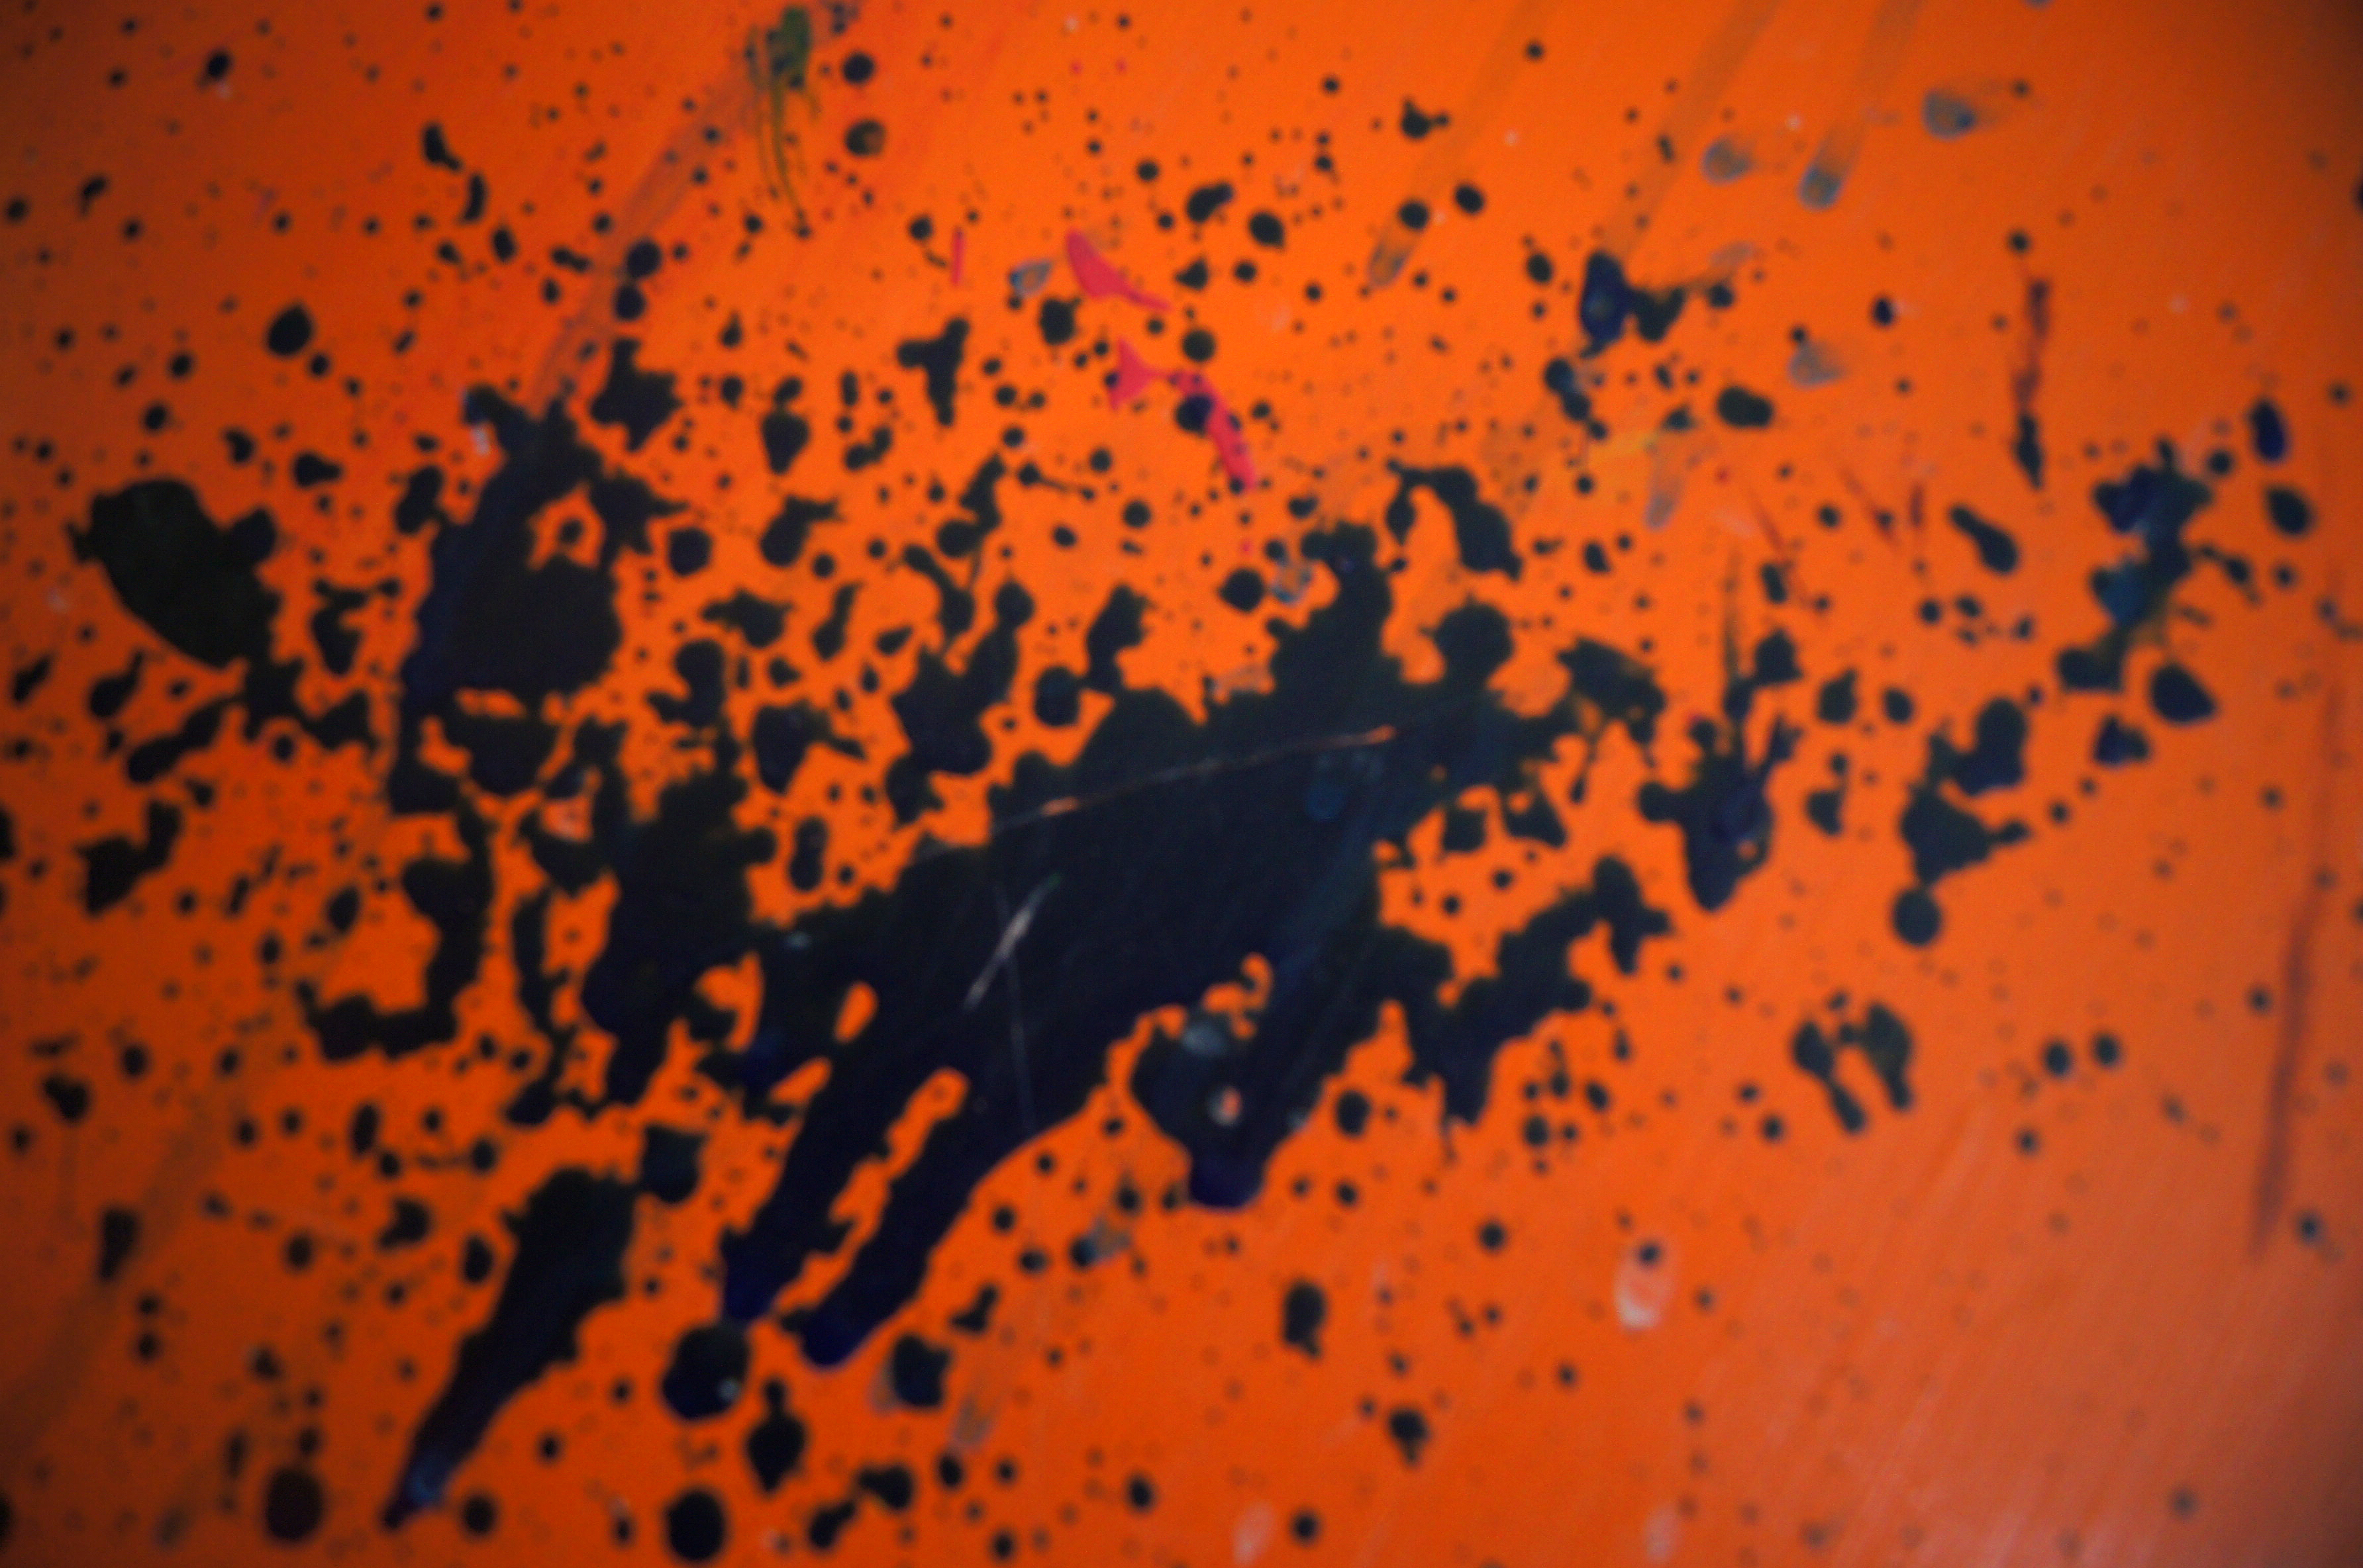 Paint Splatter on Cupboard Texture 2 by bugworlds on DeviantArt